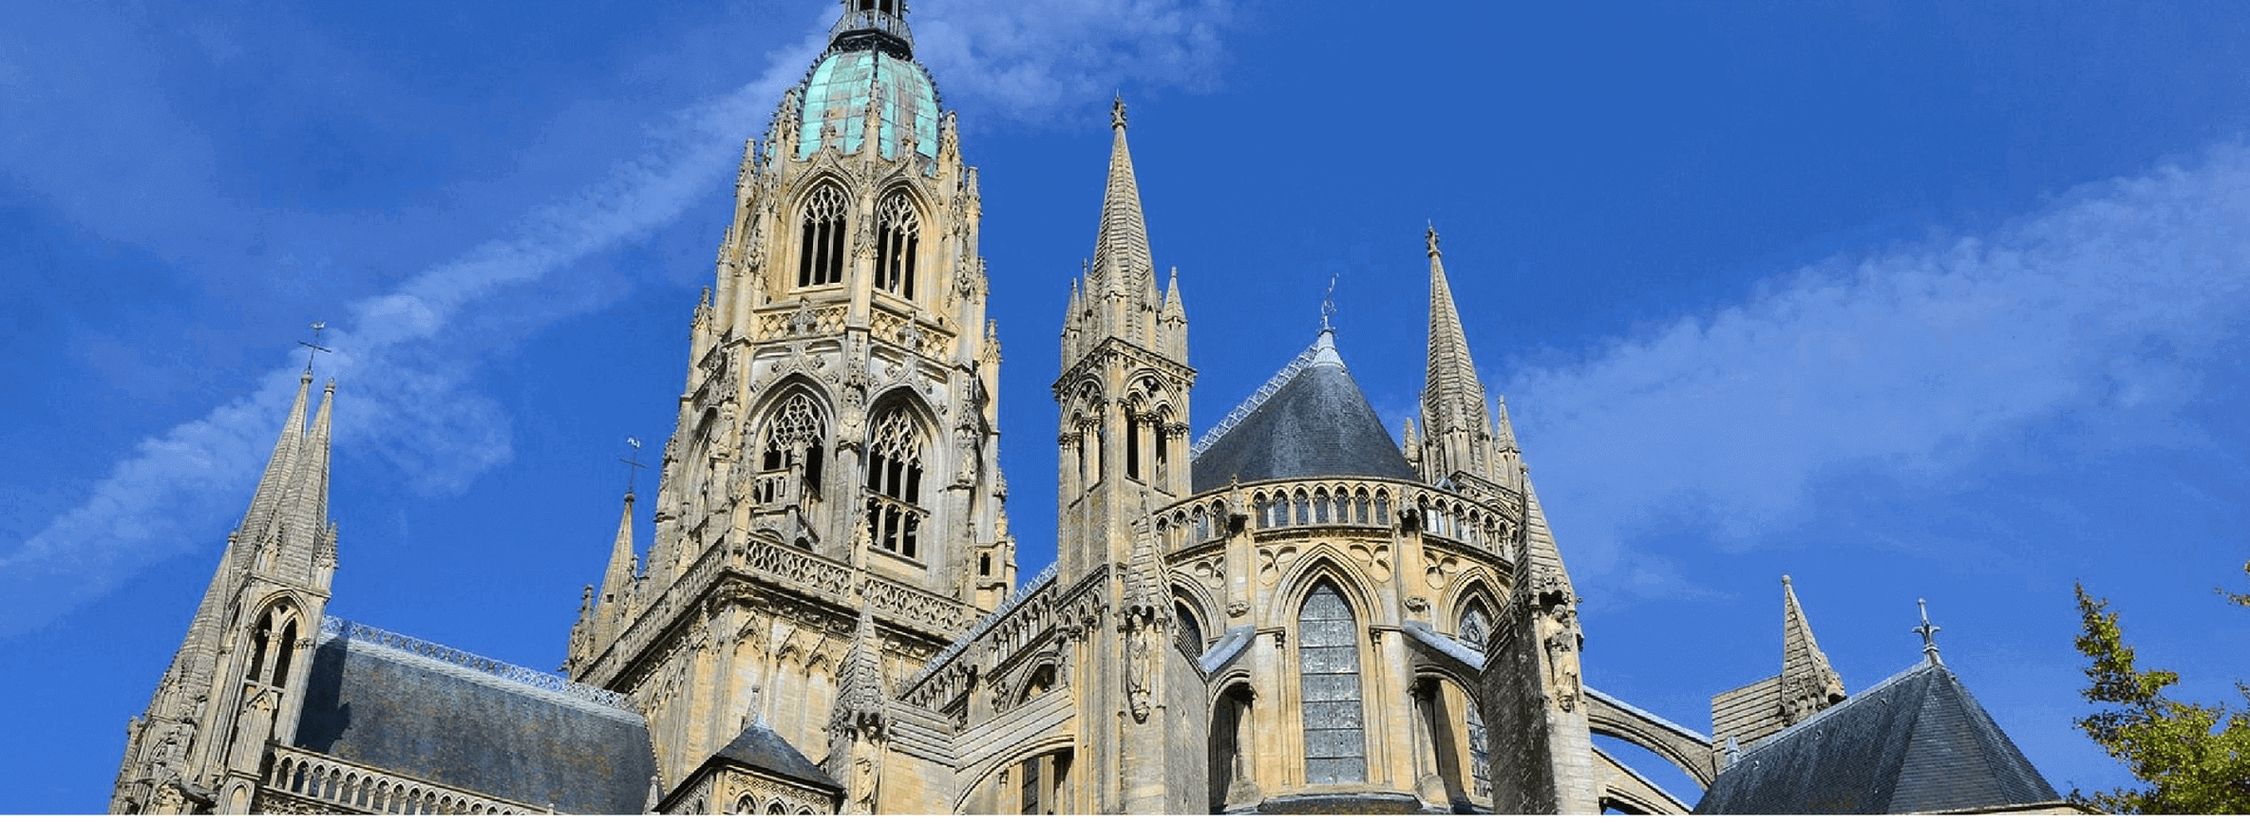 Bayeux joyau du gothique normand 